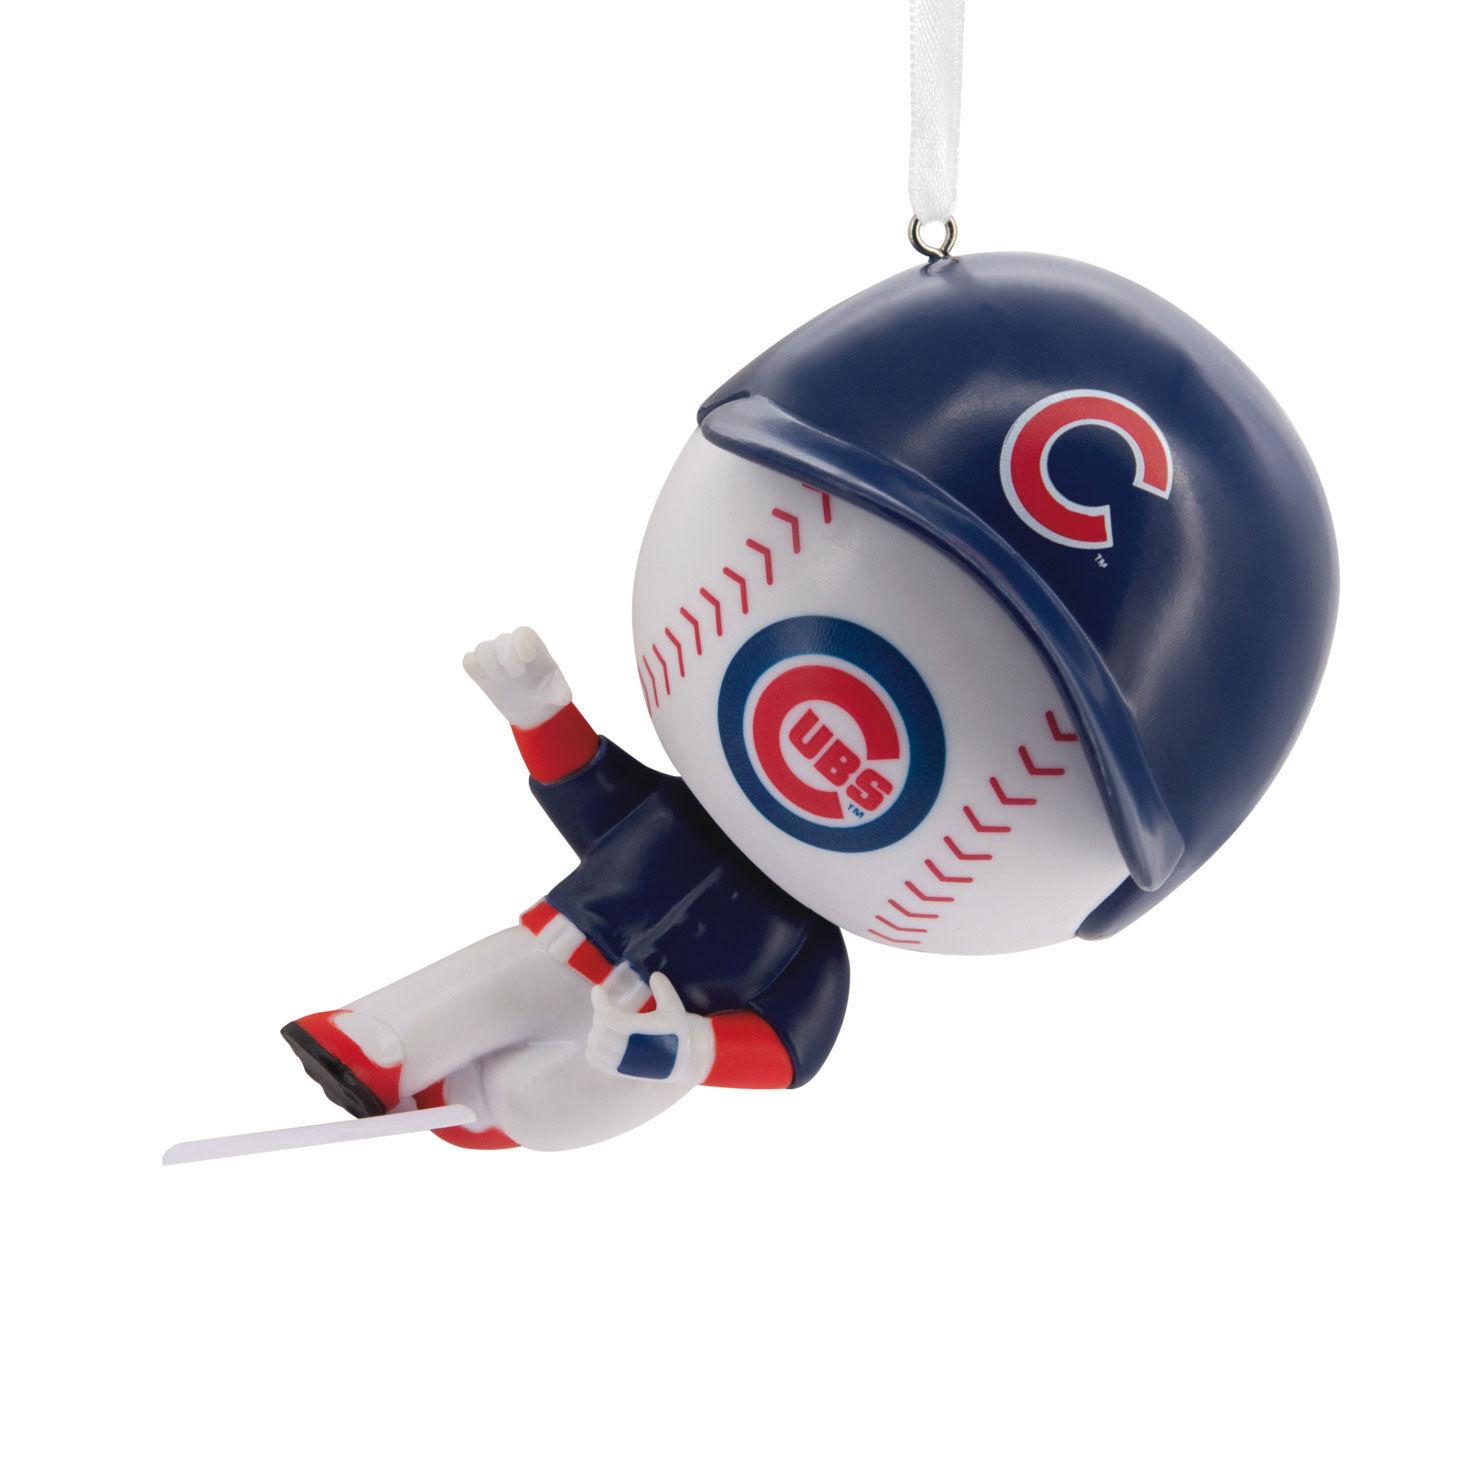 MLB Chicago Cubs™ Baseball Jersey Metal Hallmark Ornament